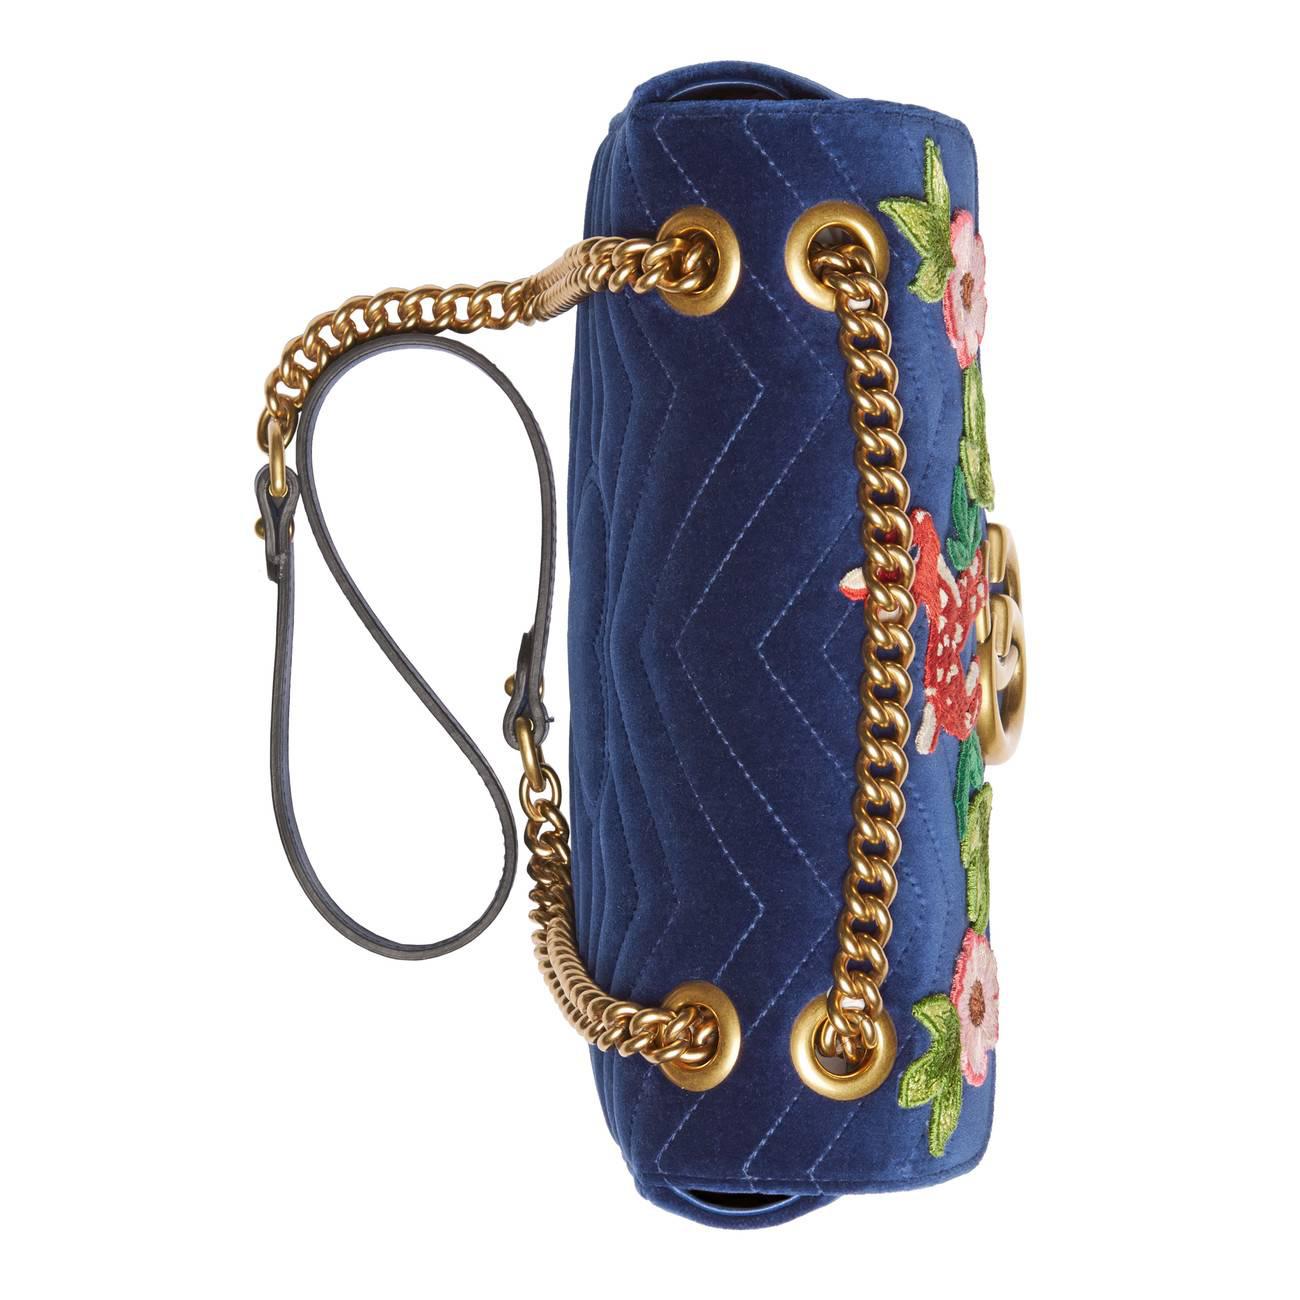 Gucci GG Marmont Velvet Small Shoulder Bag in Blue - Lyst